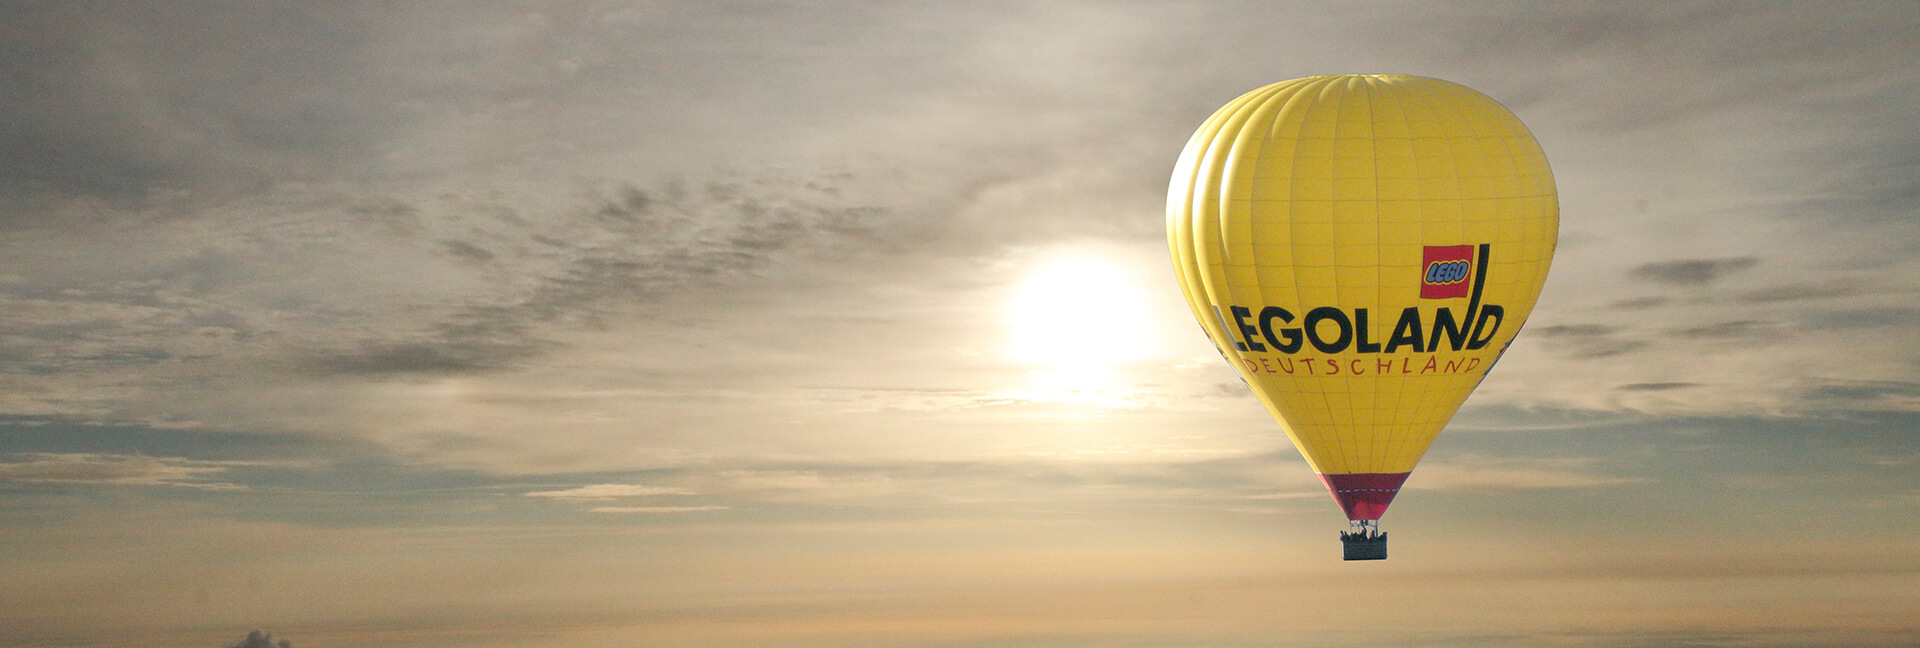 Legoland Deutschland Resort - Heißluftballonfahrt